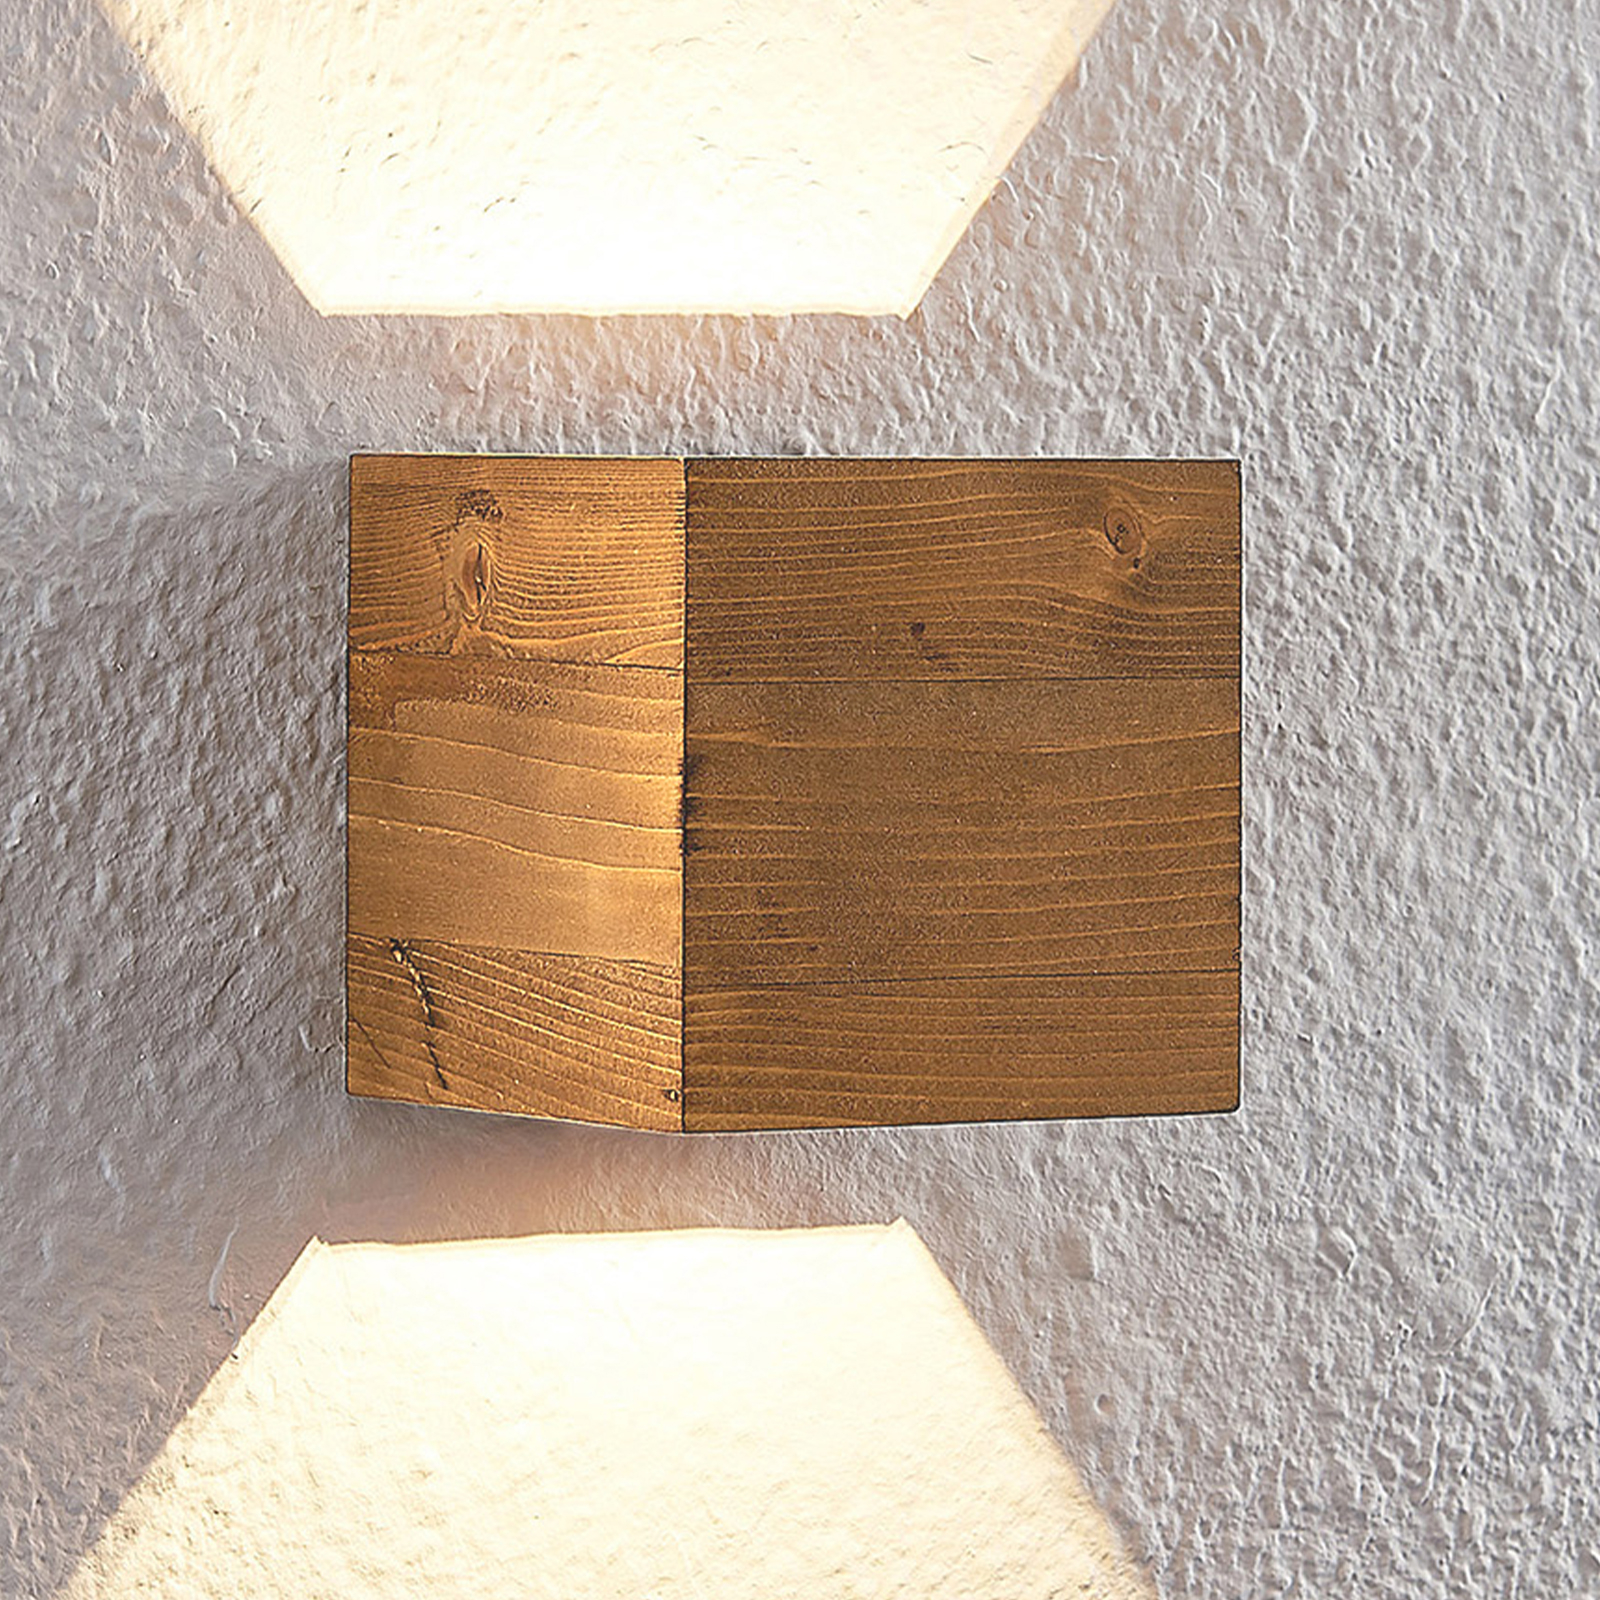 Lindby Benicio houten LED wandlamp, hoekig, 11 cm